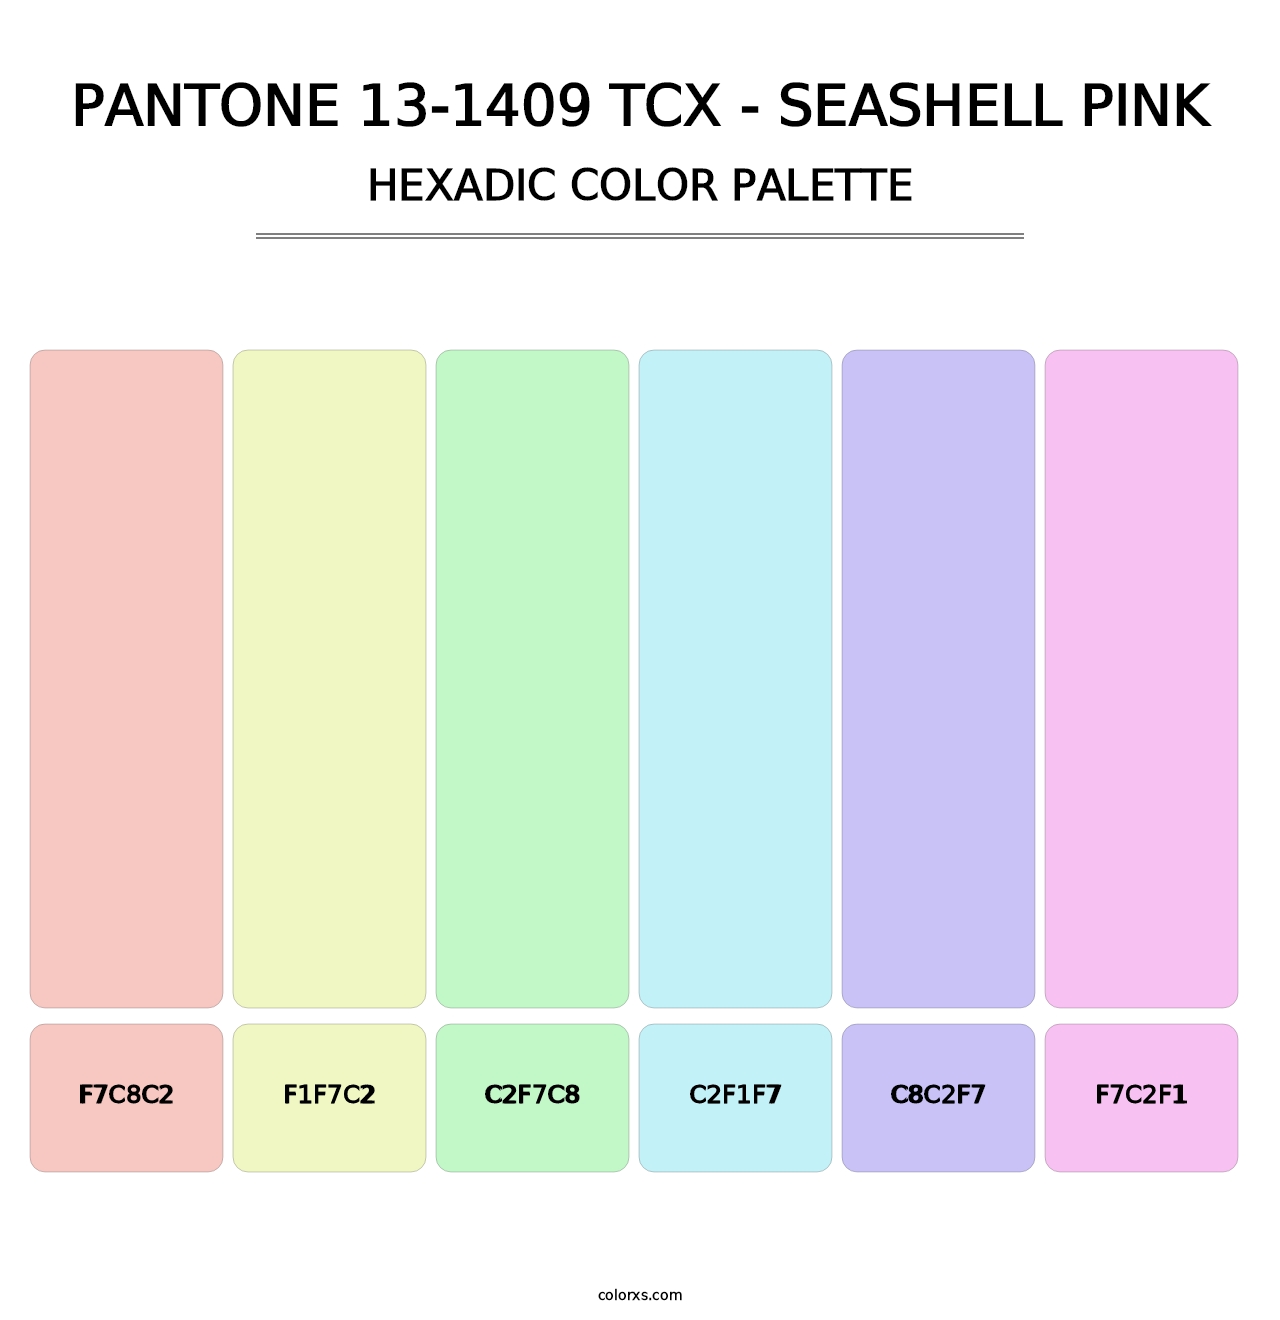 PANTONE 13-1409 TCX - Seashell Pink - Hexadic Color Palette